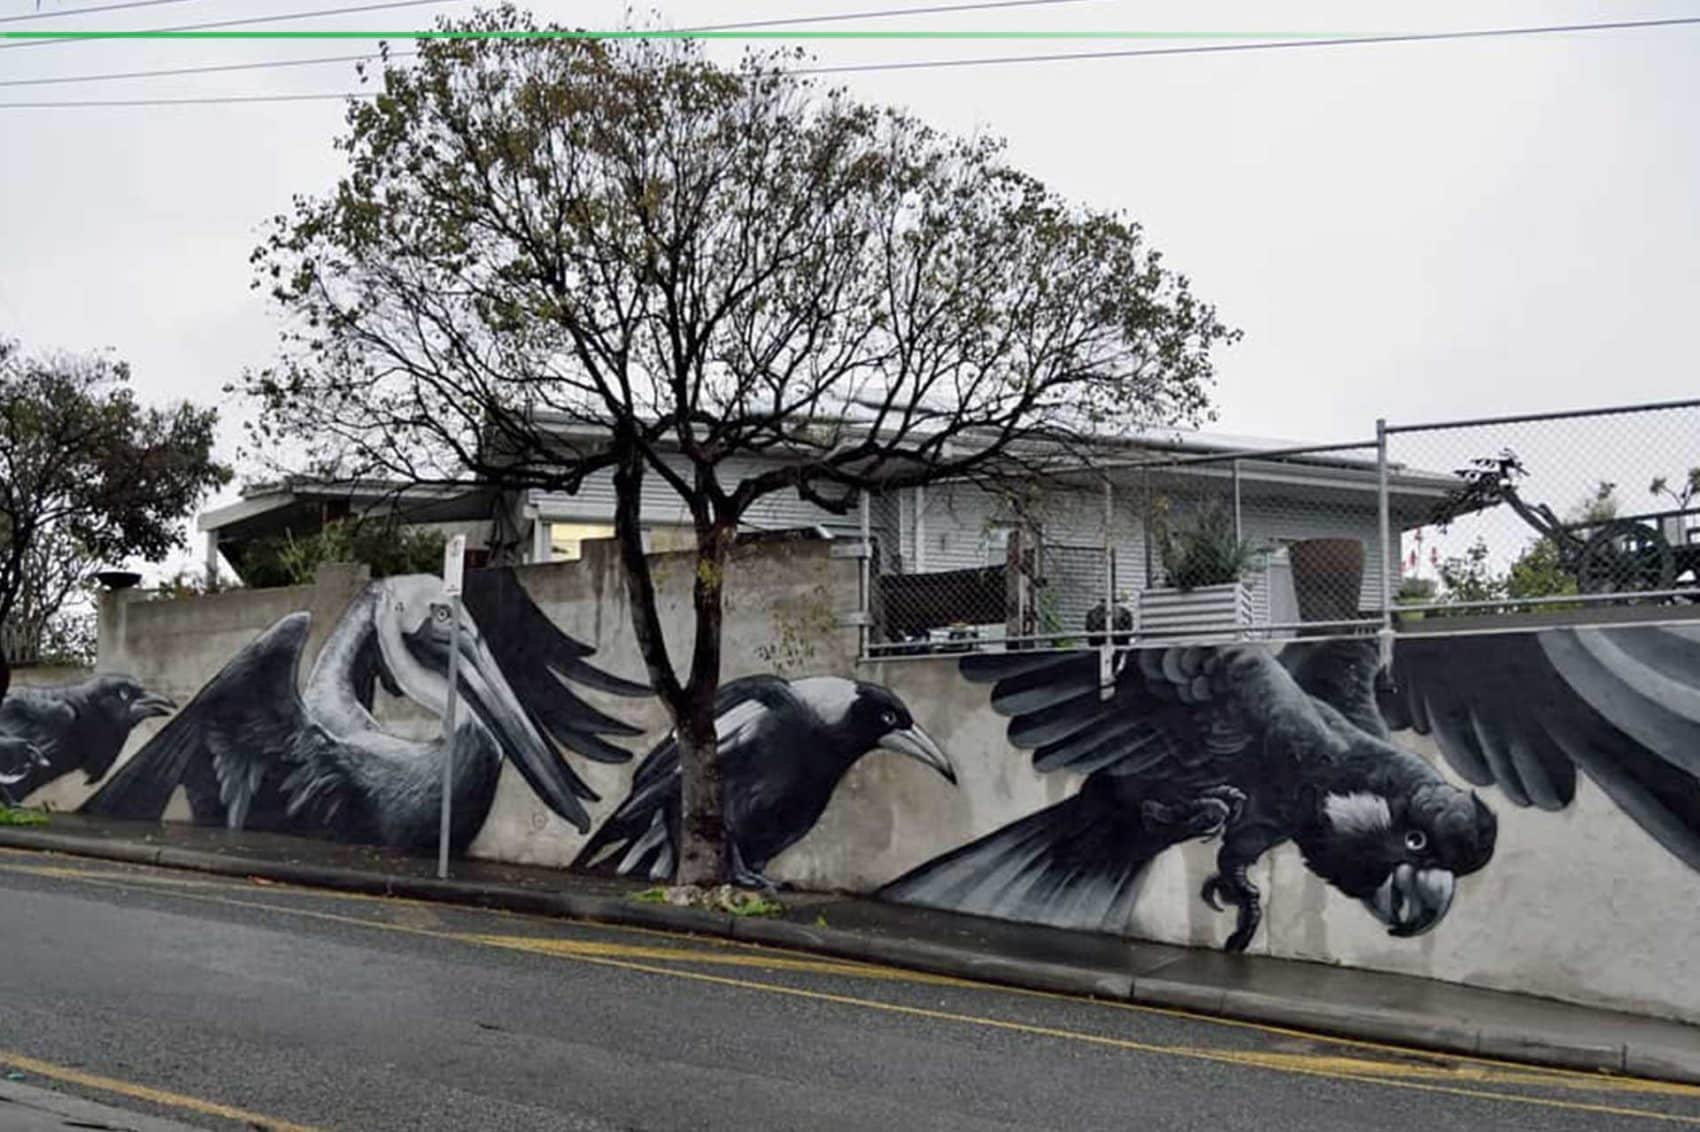 graffiti birds harvey jackson